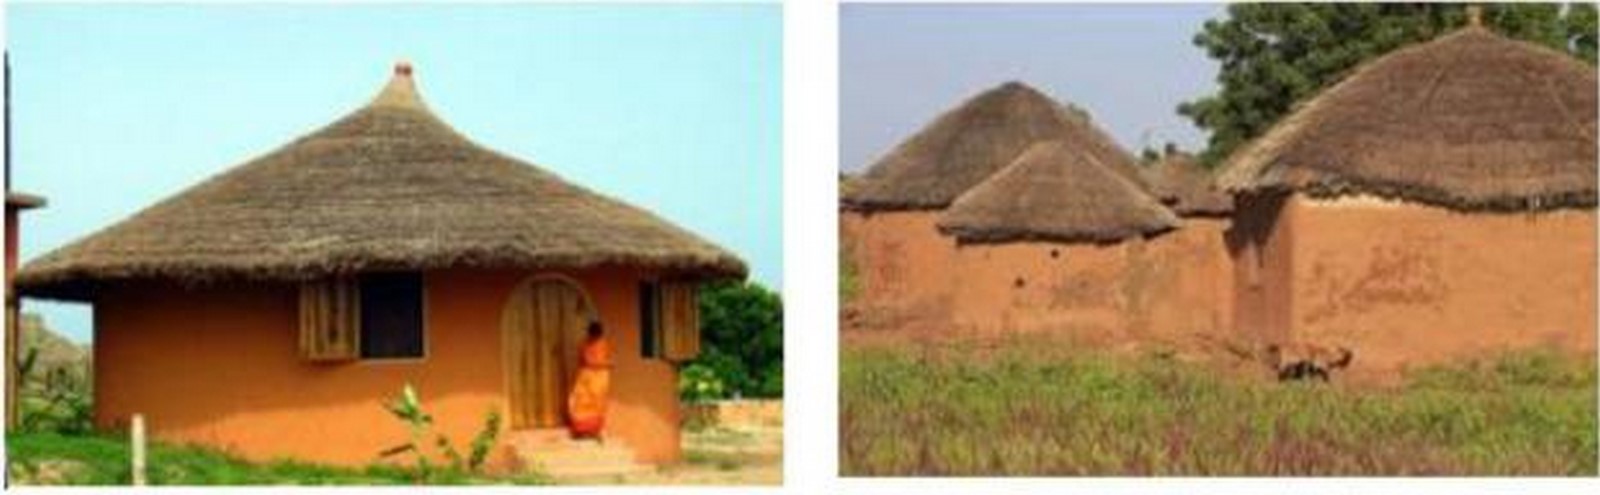 Typical Adobe buildings in Ghana_hiveminer.com.